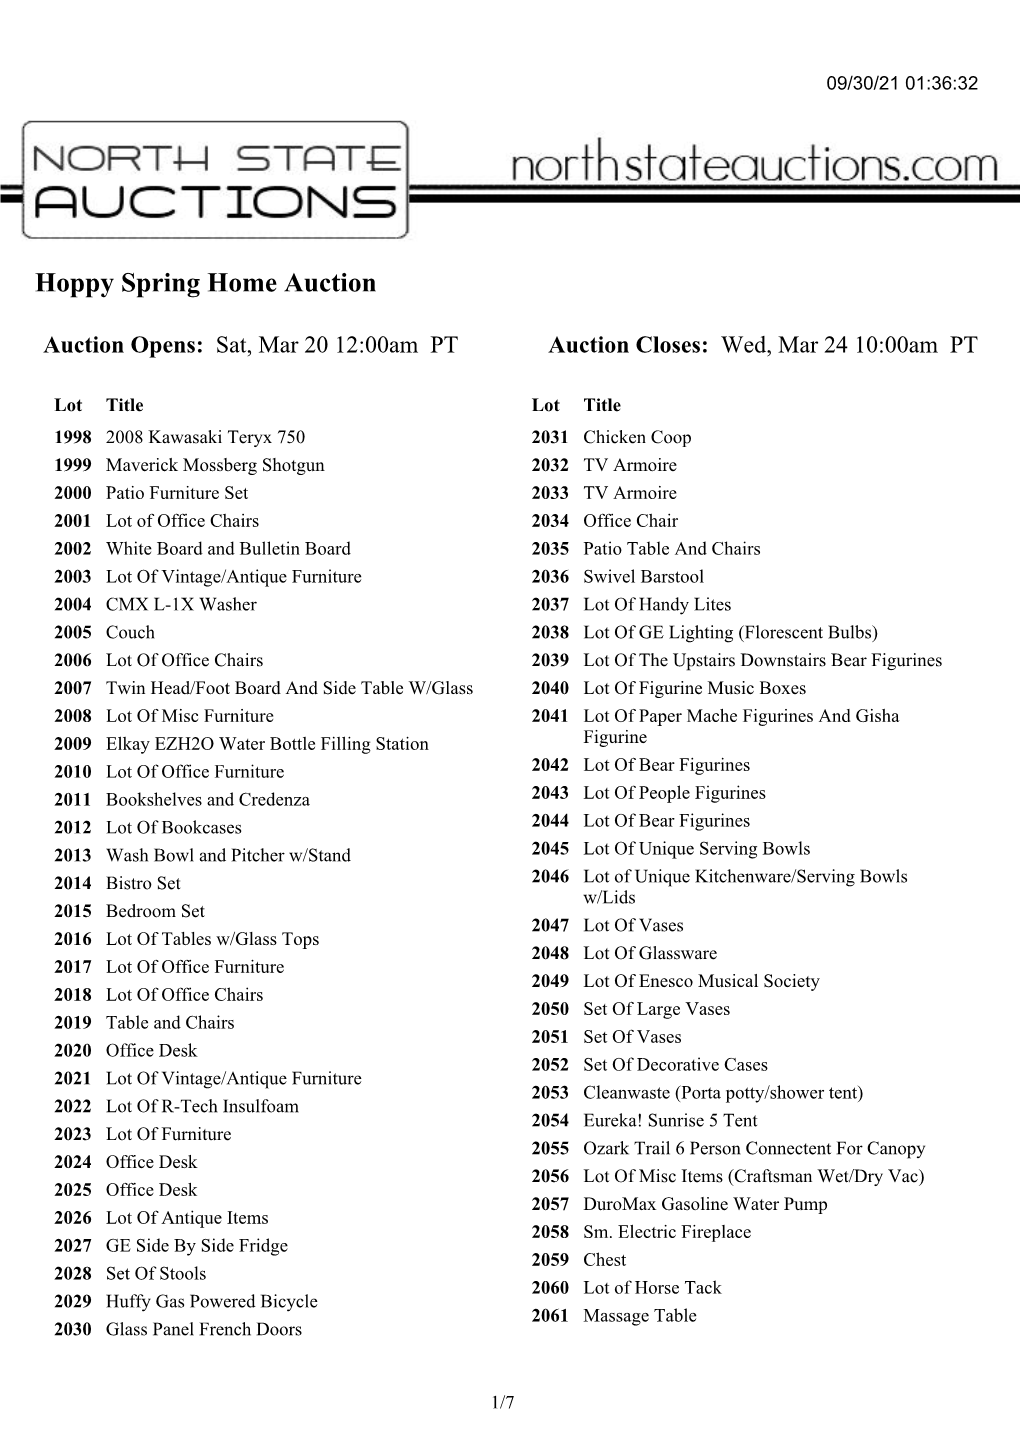 Hoppy Spring Home Auction